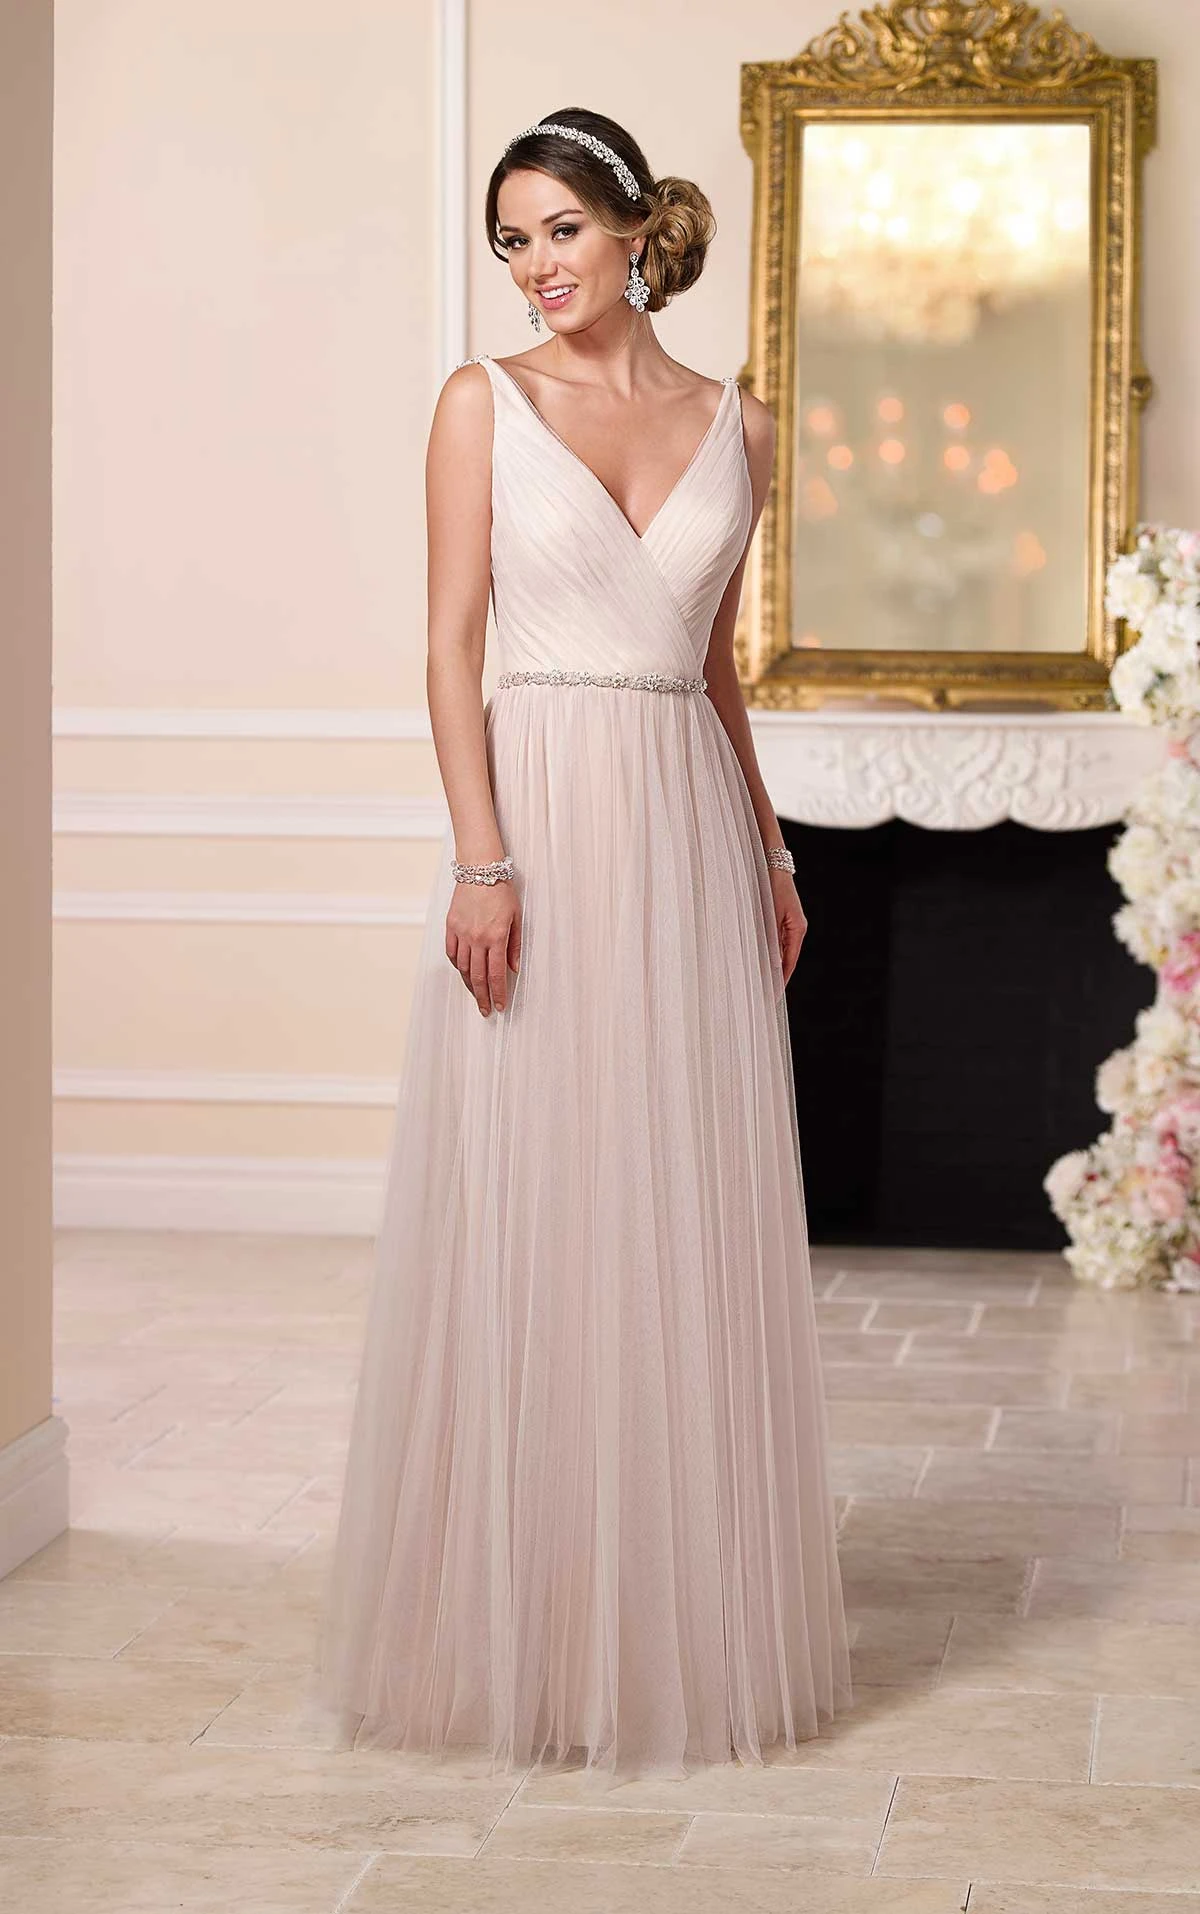 Flowy Wedding Dress with Sparkly Belt Stella York